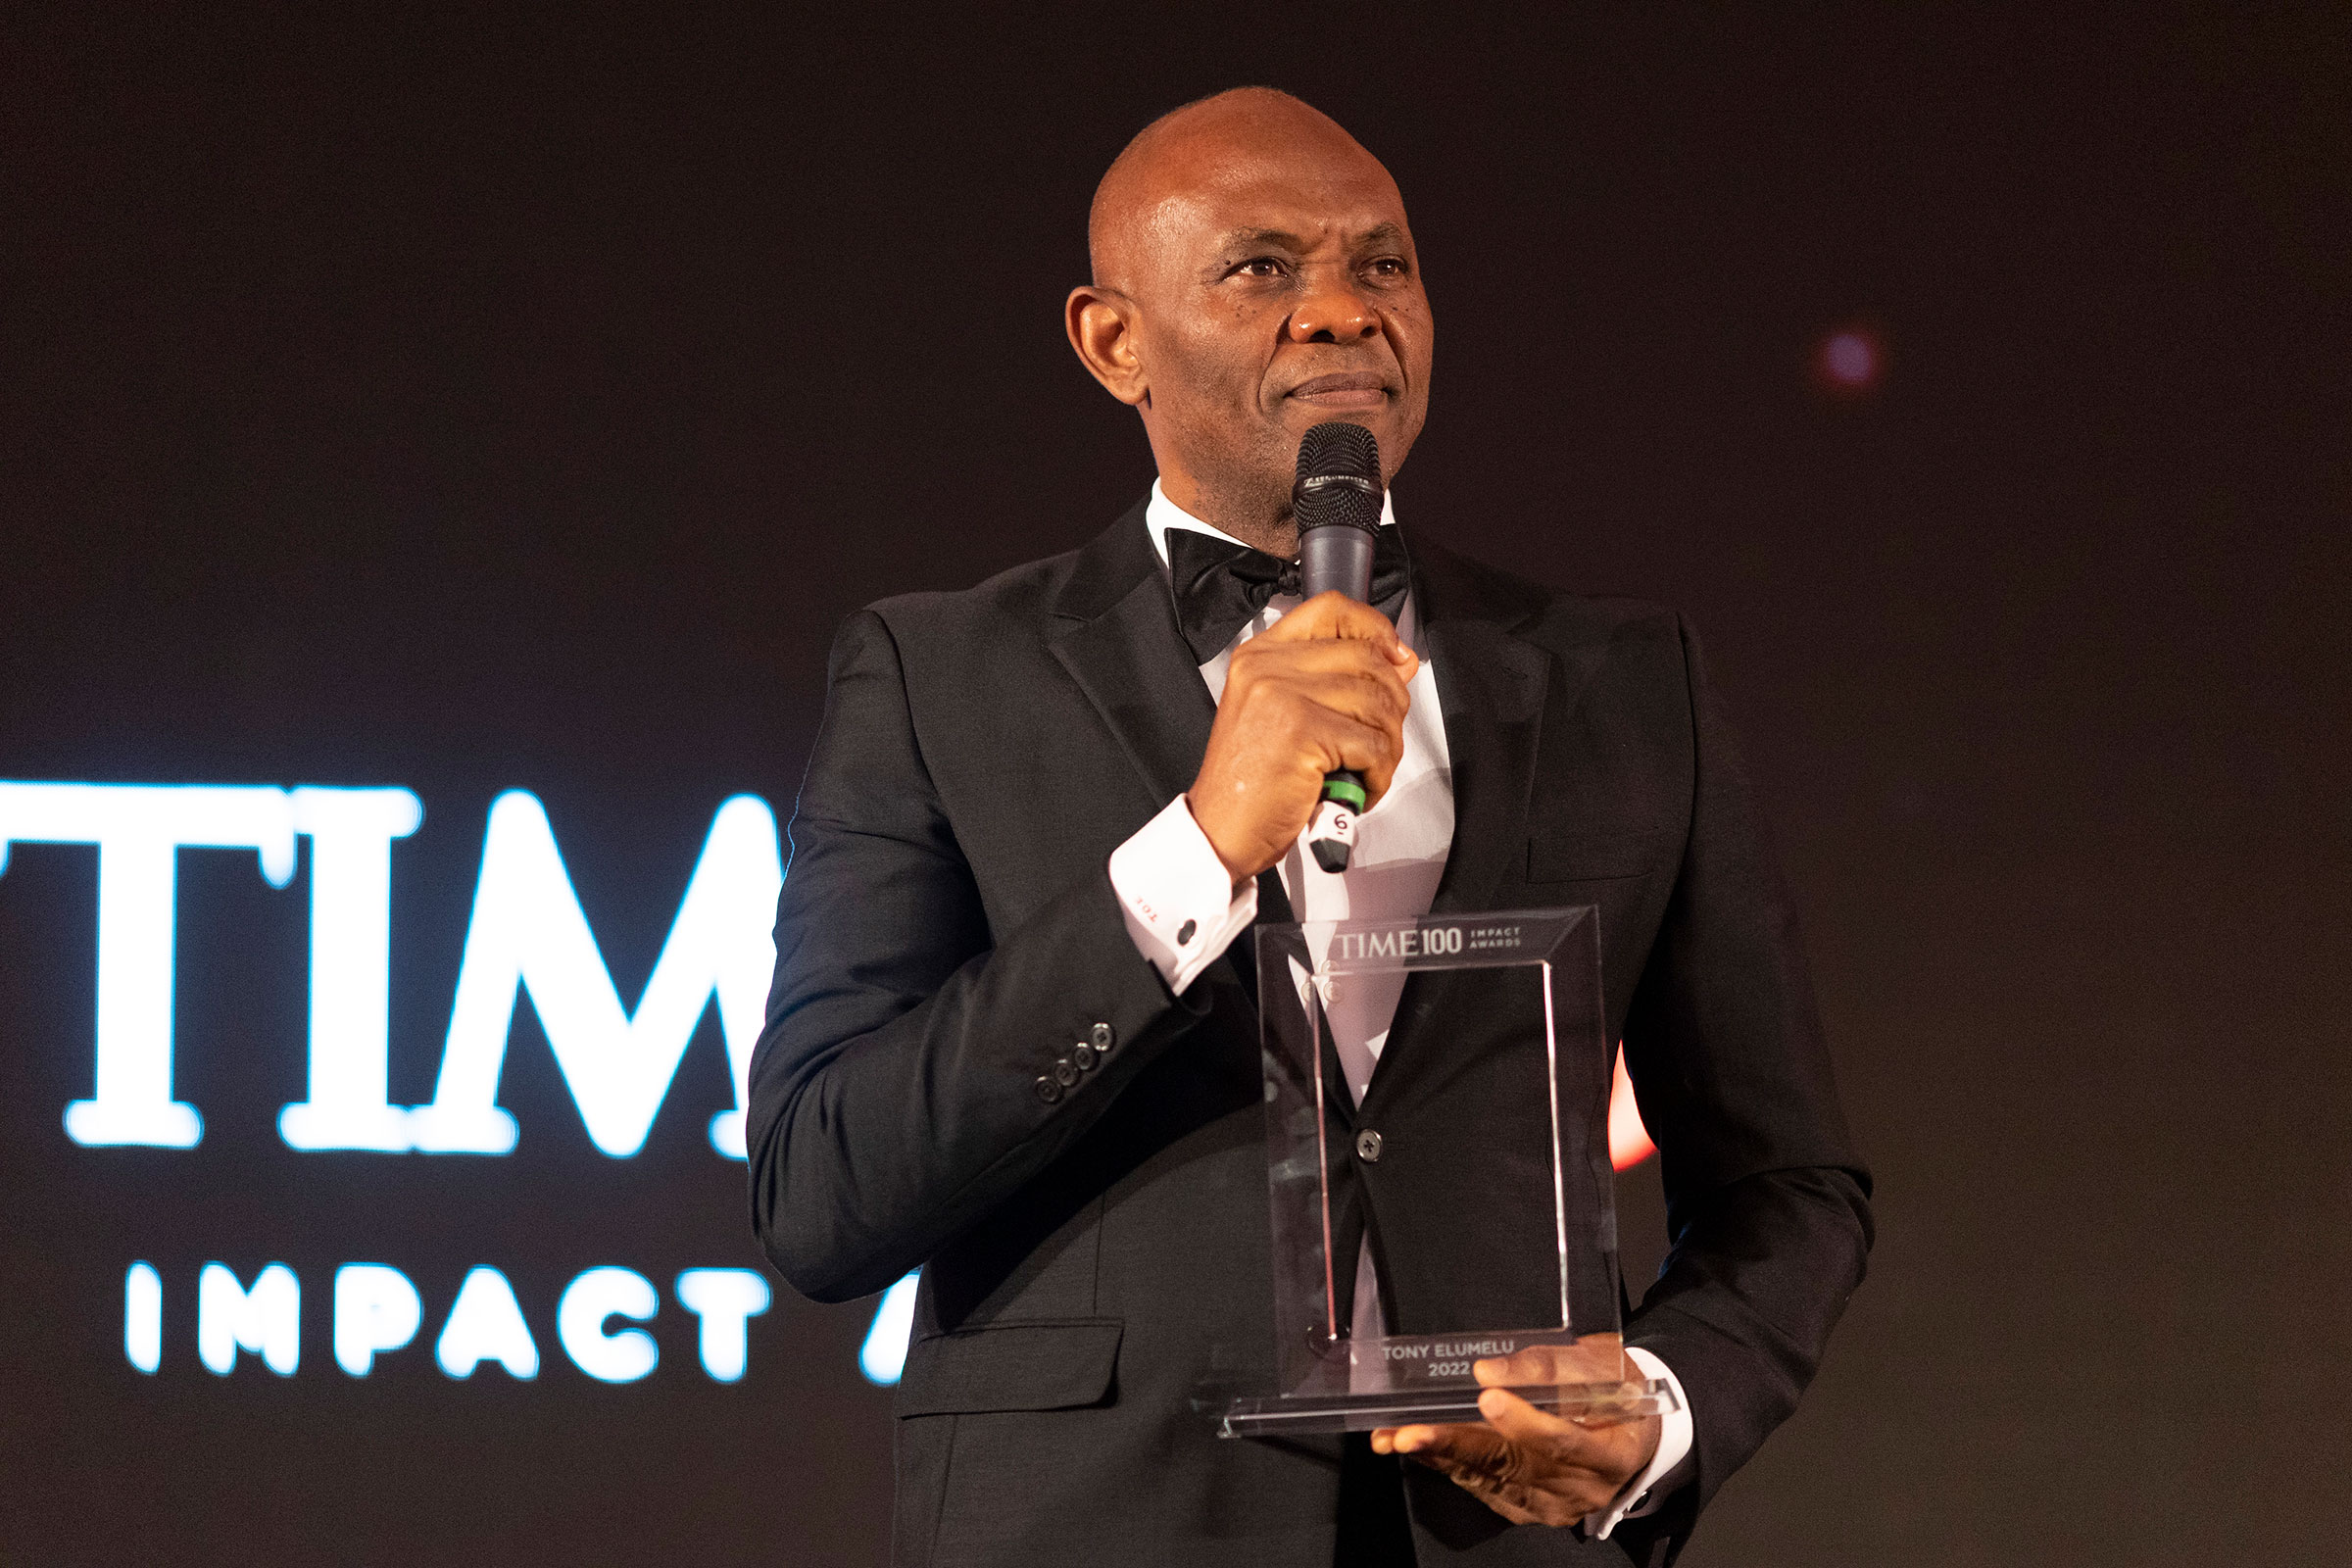 TIME 100 Impact Dubai: Tony Elumelu